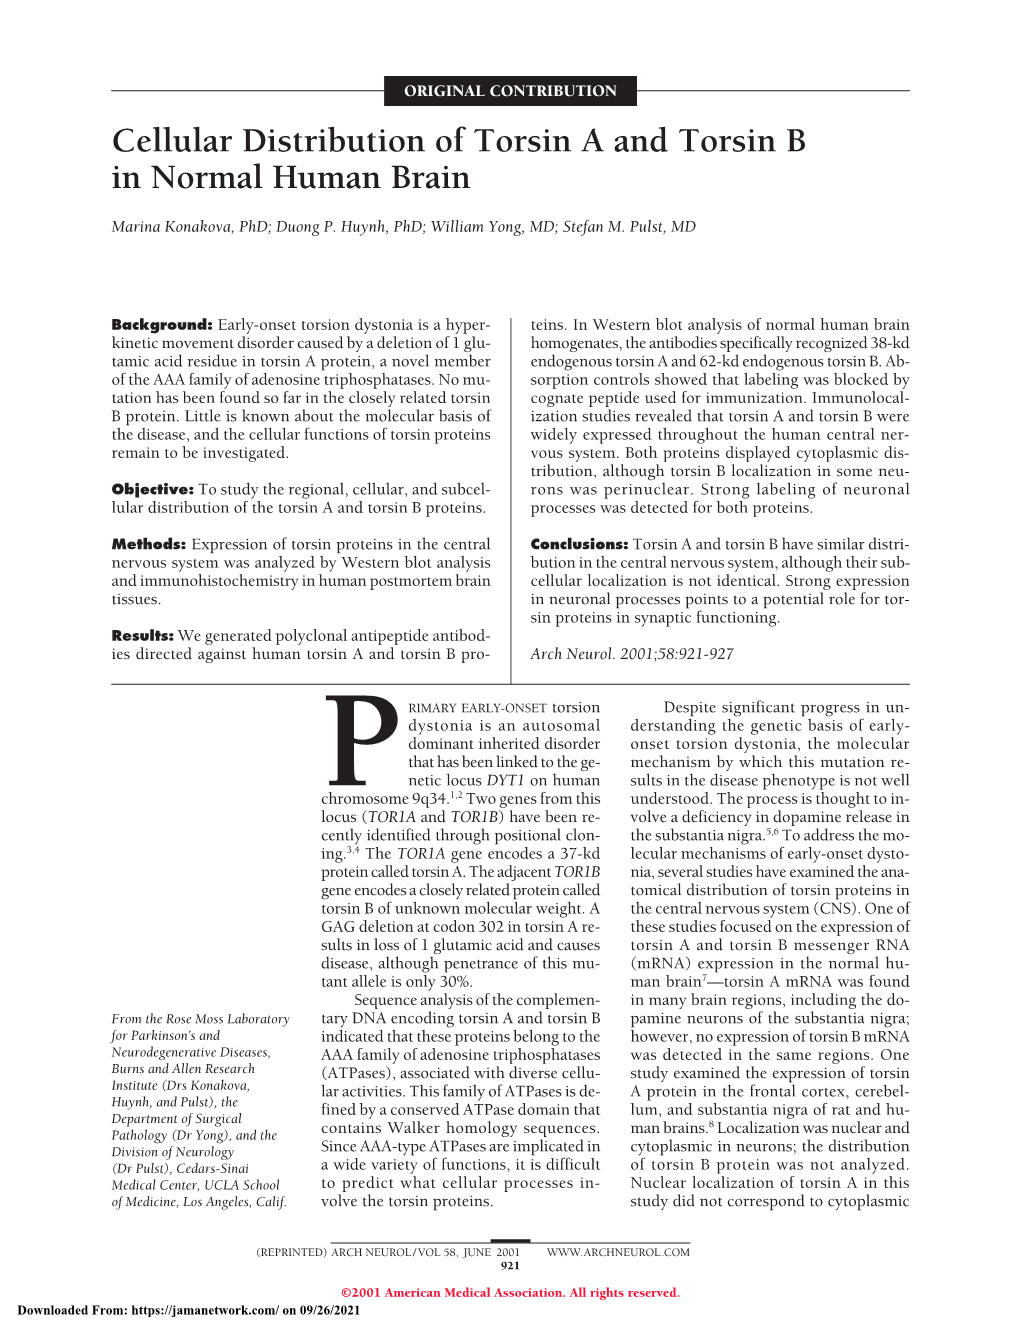 Cellular Distribution of Torsin a and Torsin B in Normal Human Brain